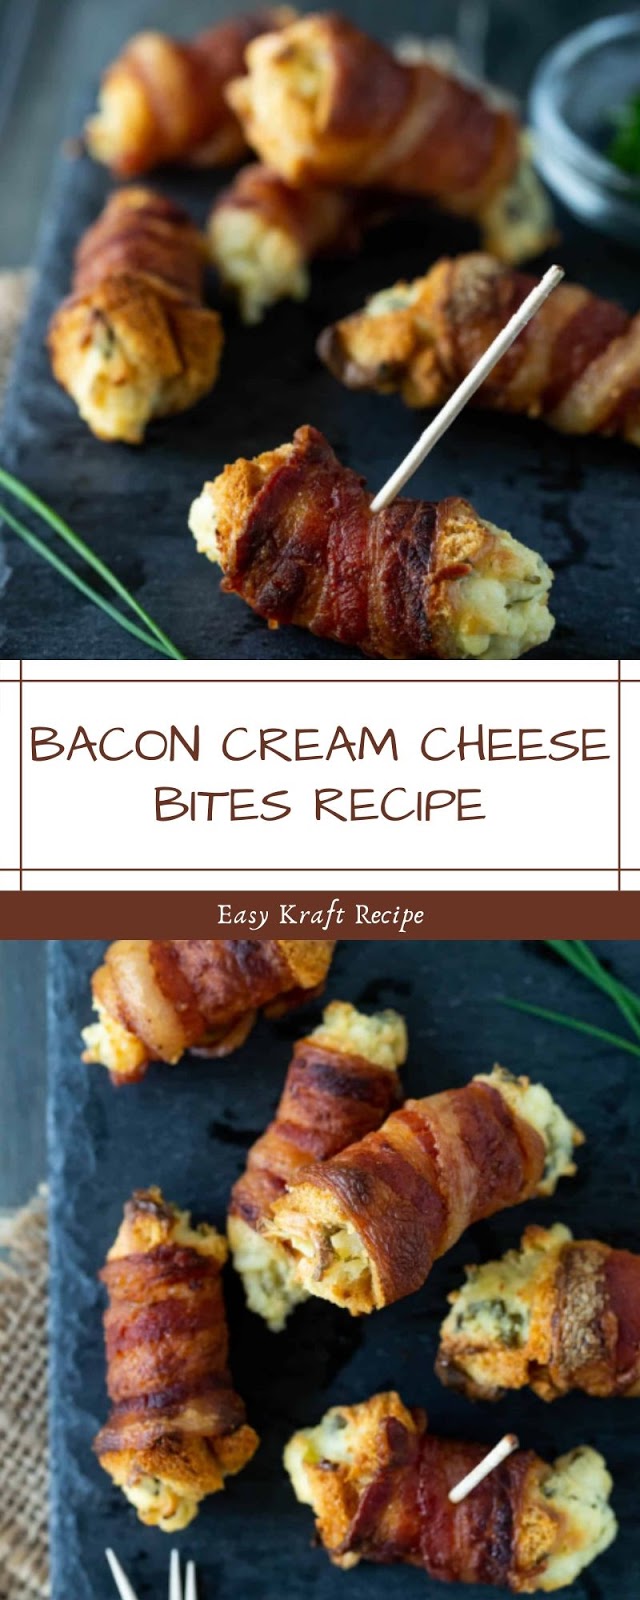 BACON CREAM CHEESE BITES RECIPE - Easy Kraft Recipes